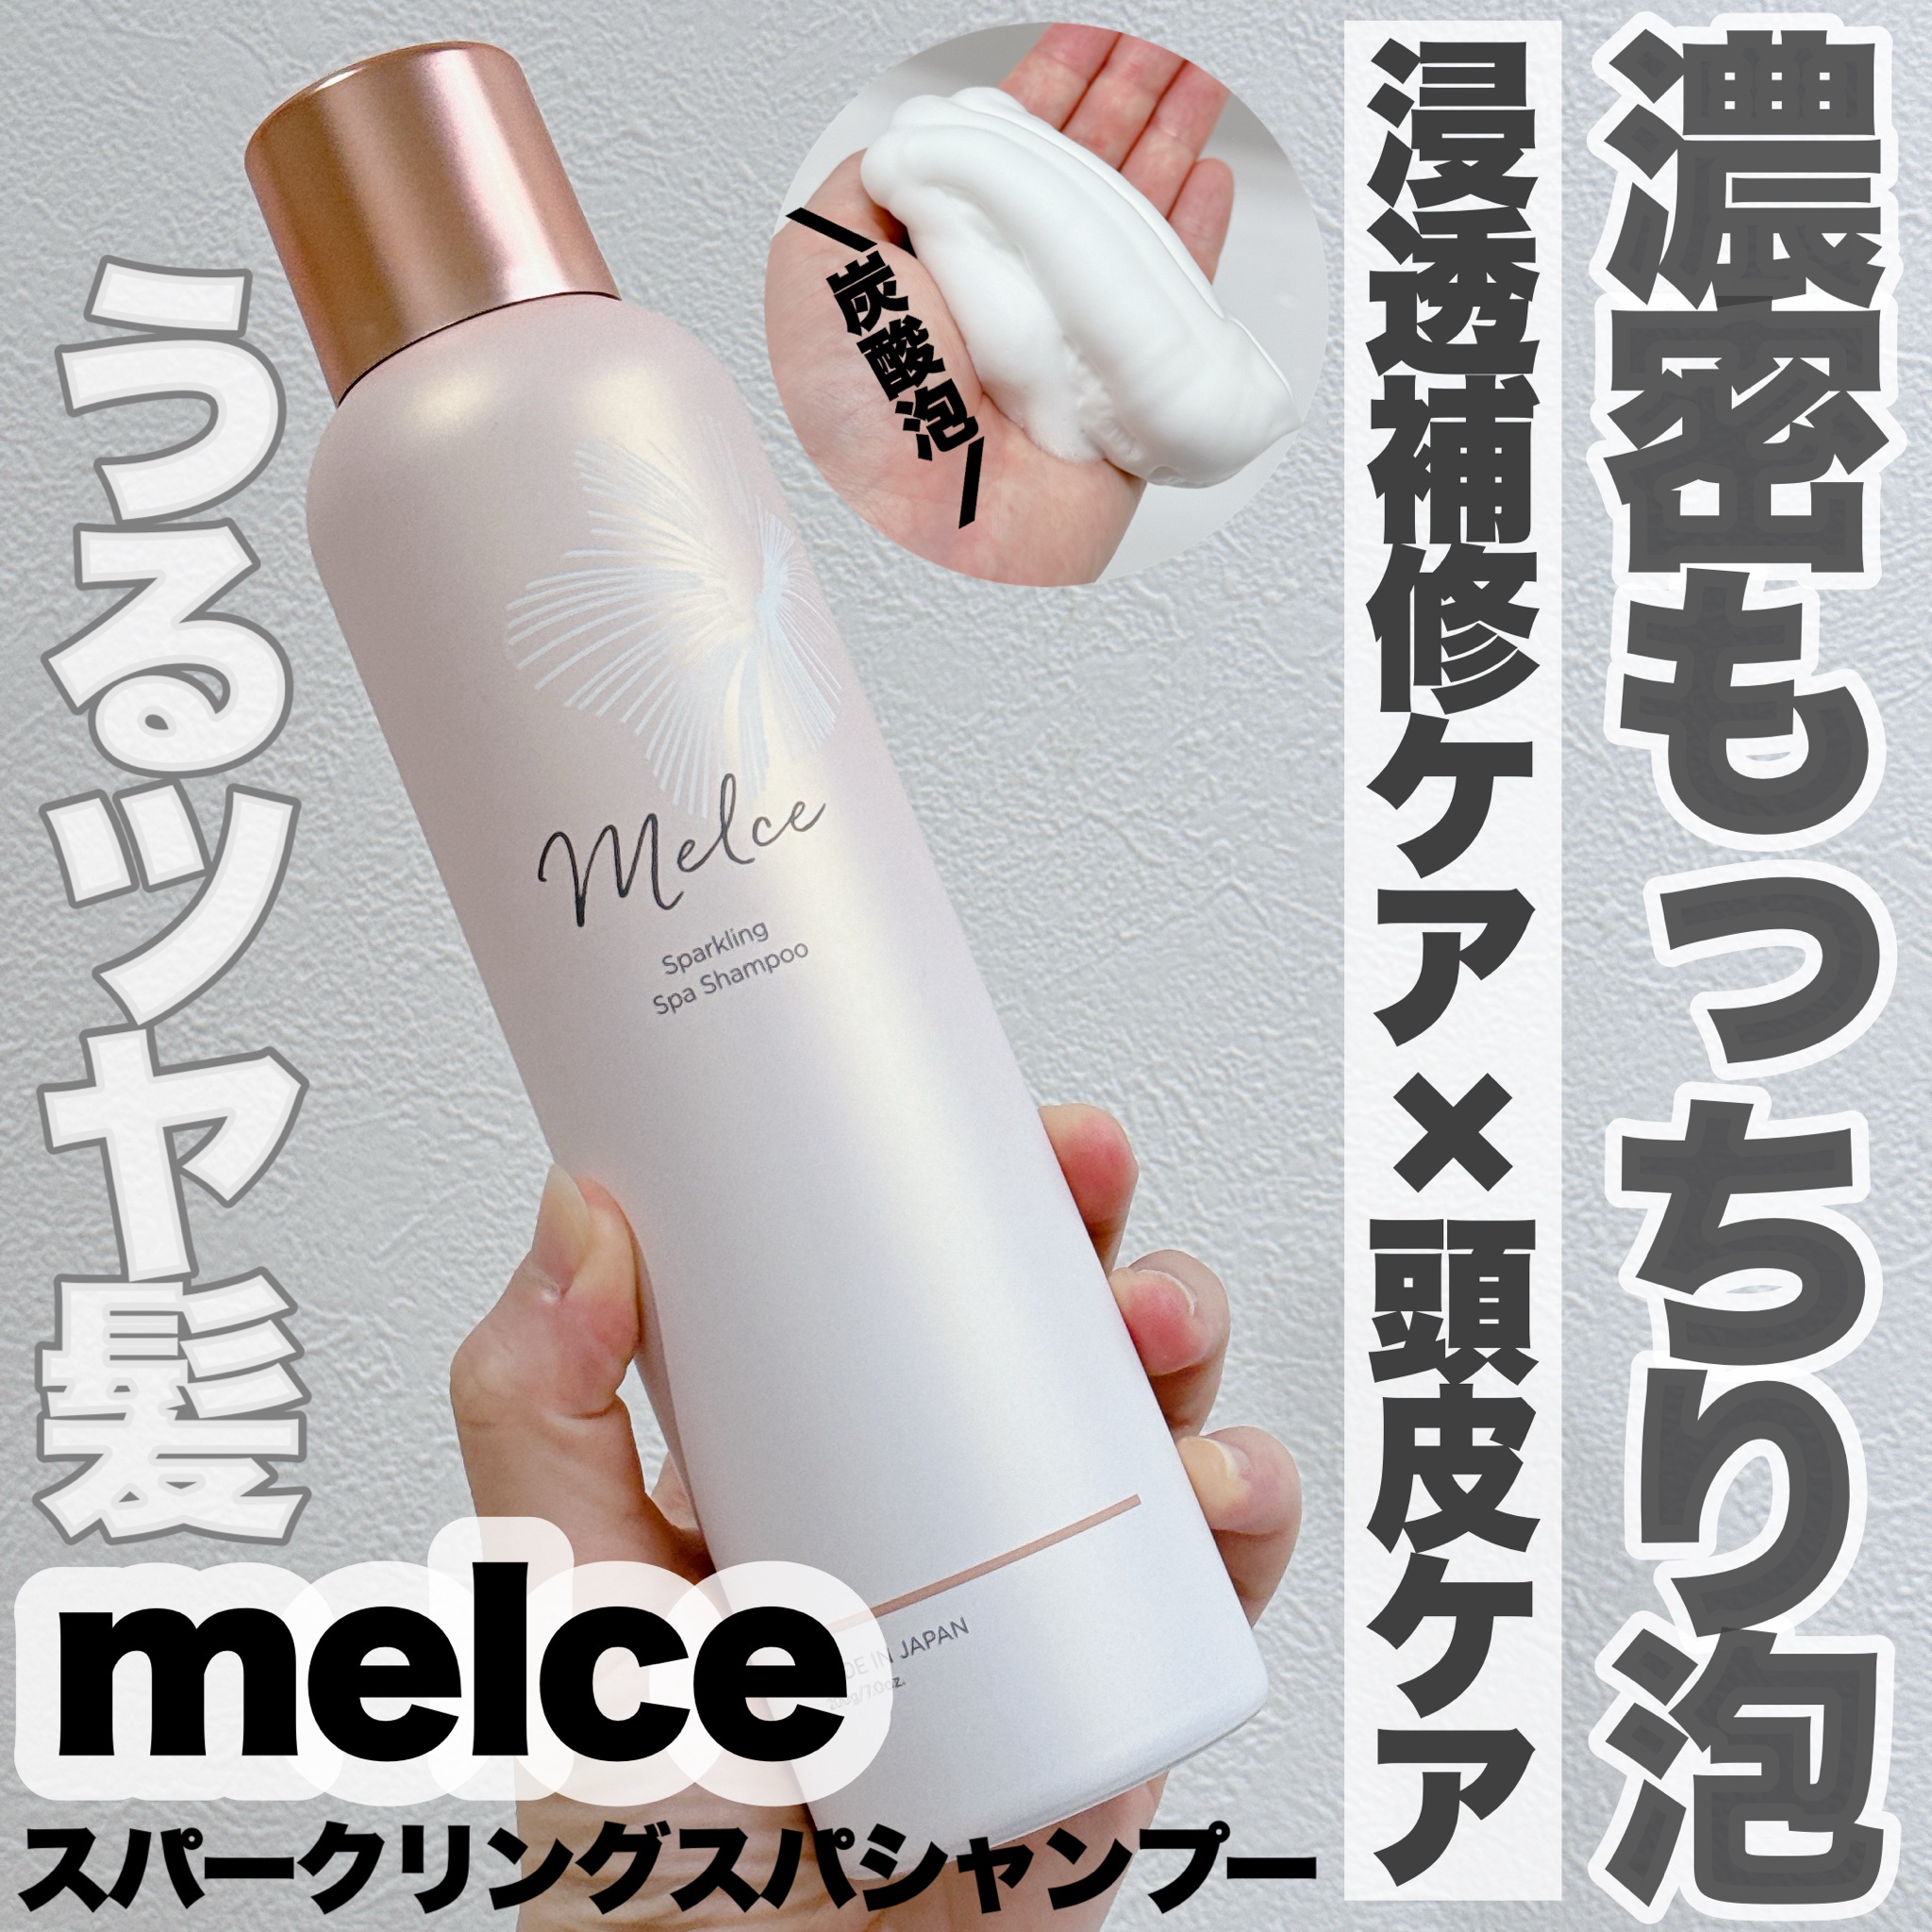 melce / メルス スパークリングスパシャンプー 200gの公式商品情報 